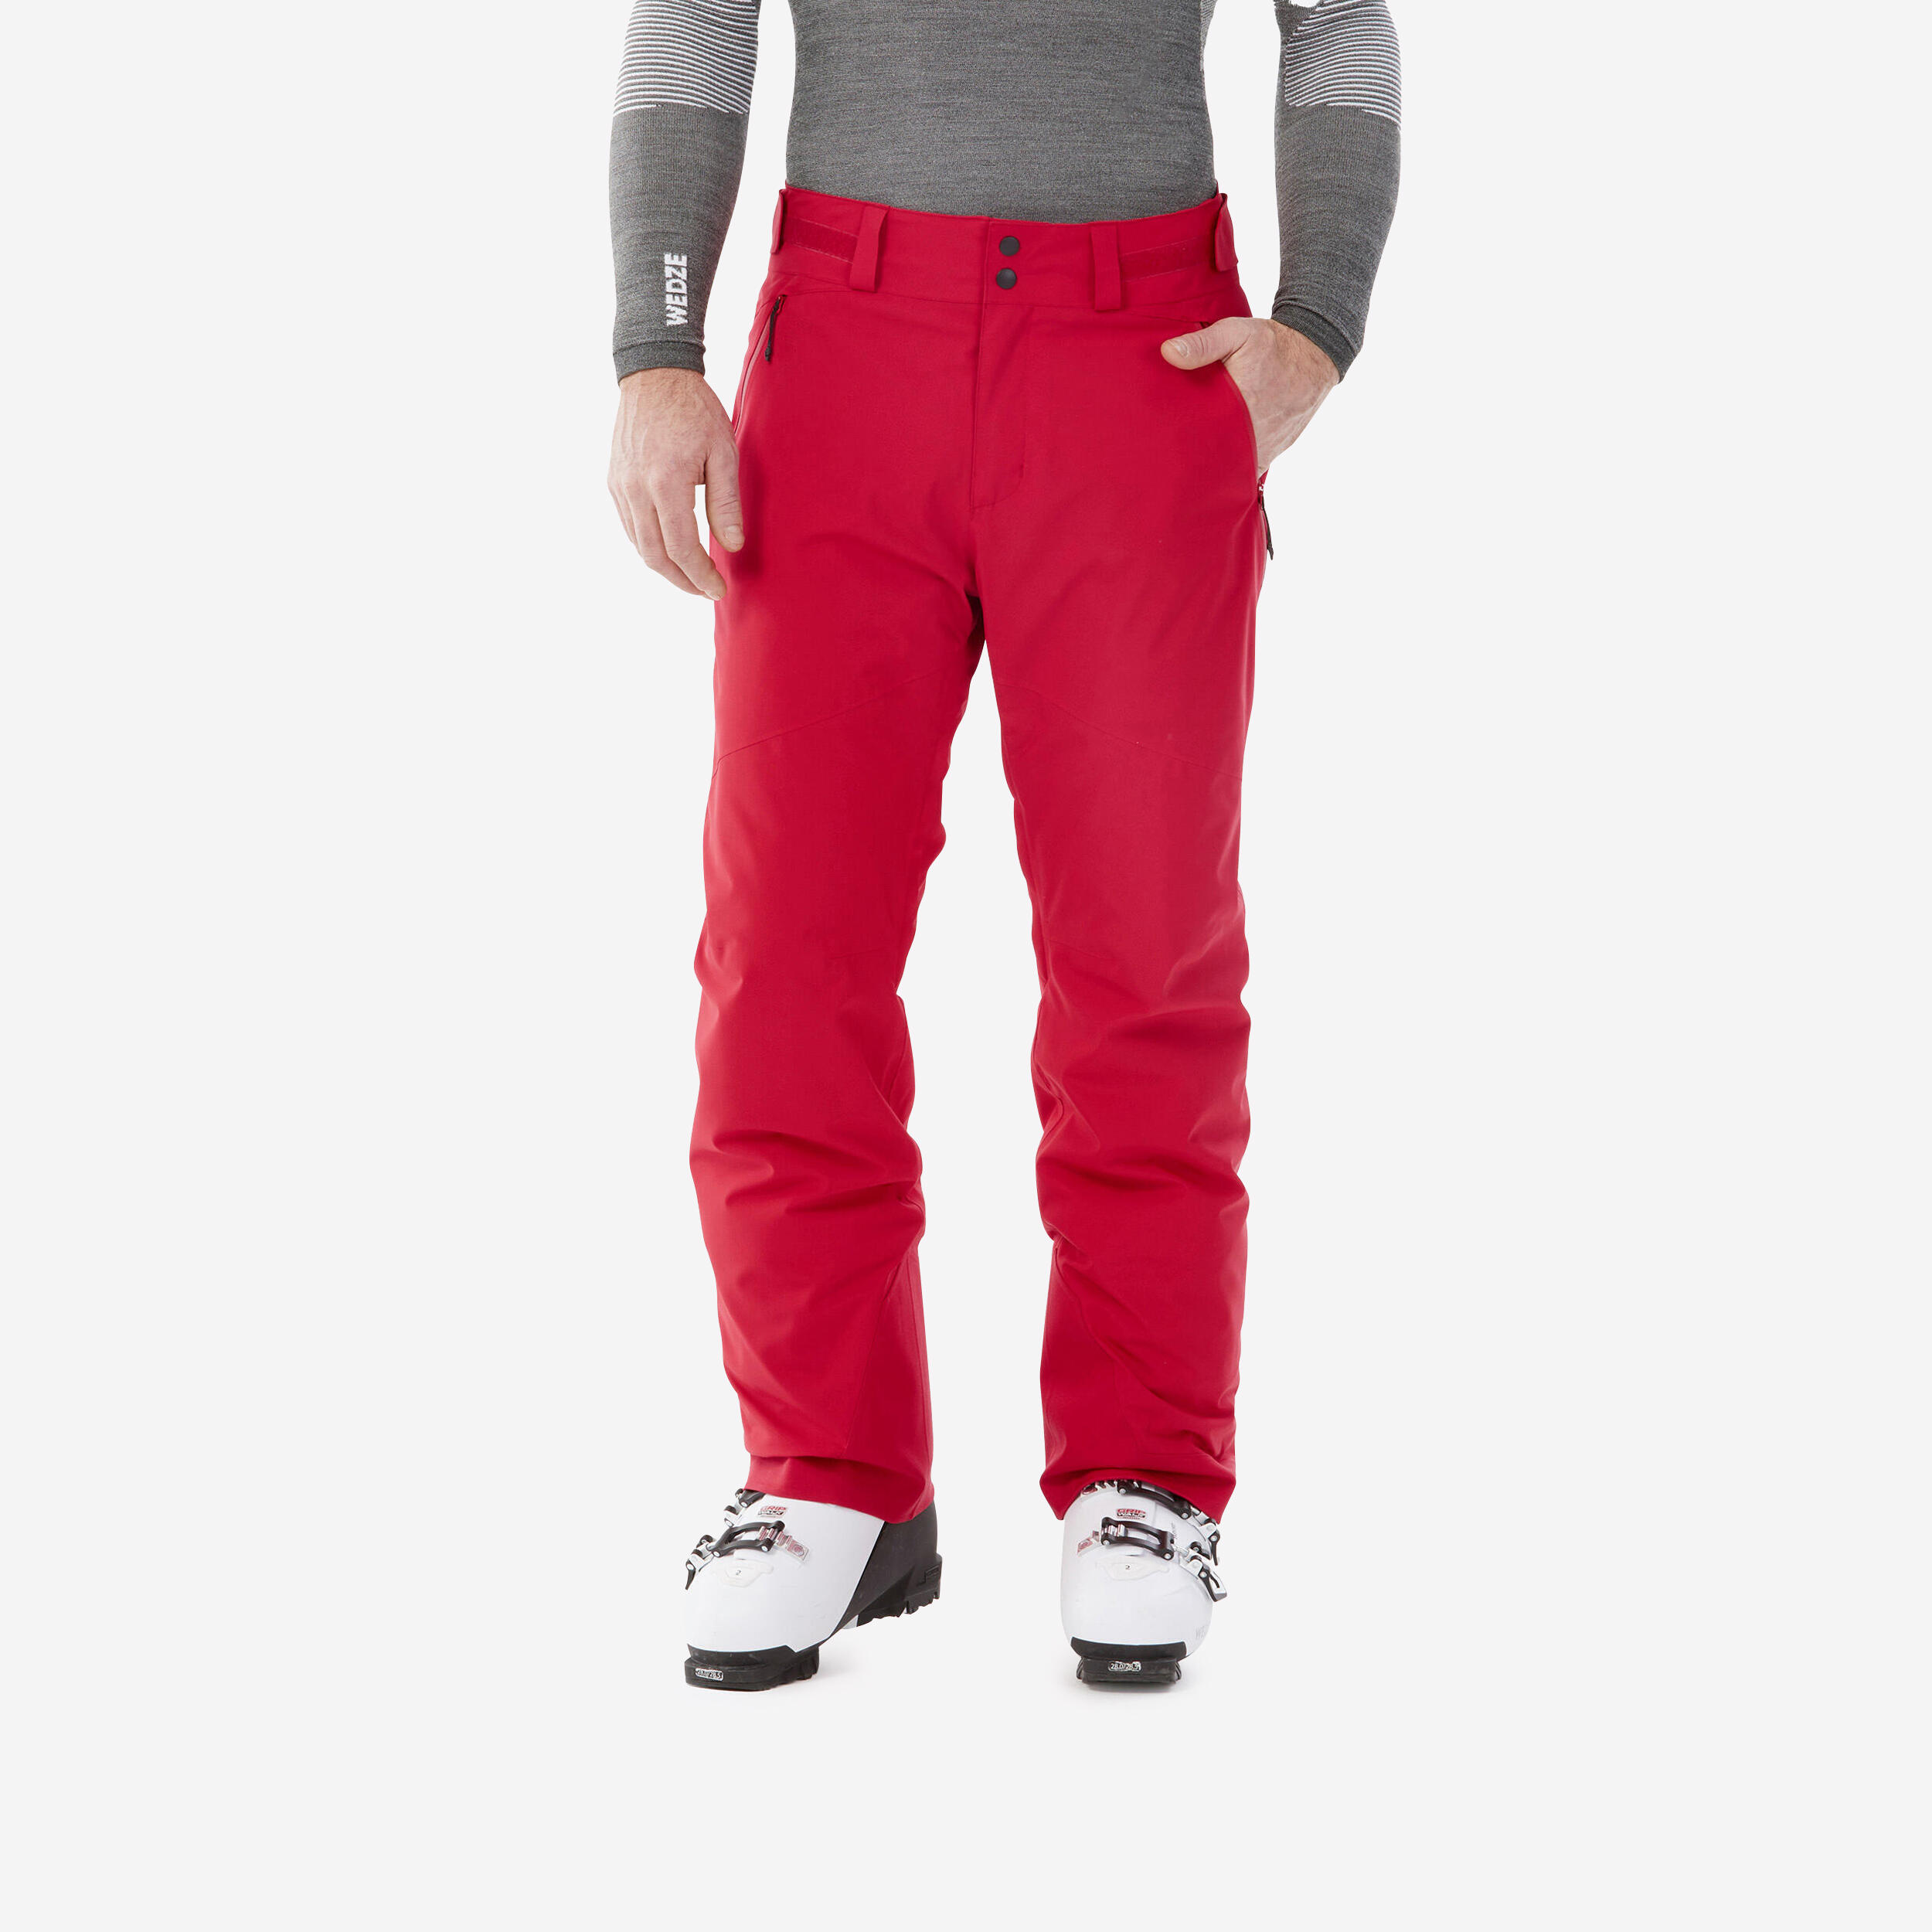 WEDZE Men’s Warm Ski Trousers Regular 500 - Red